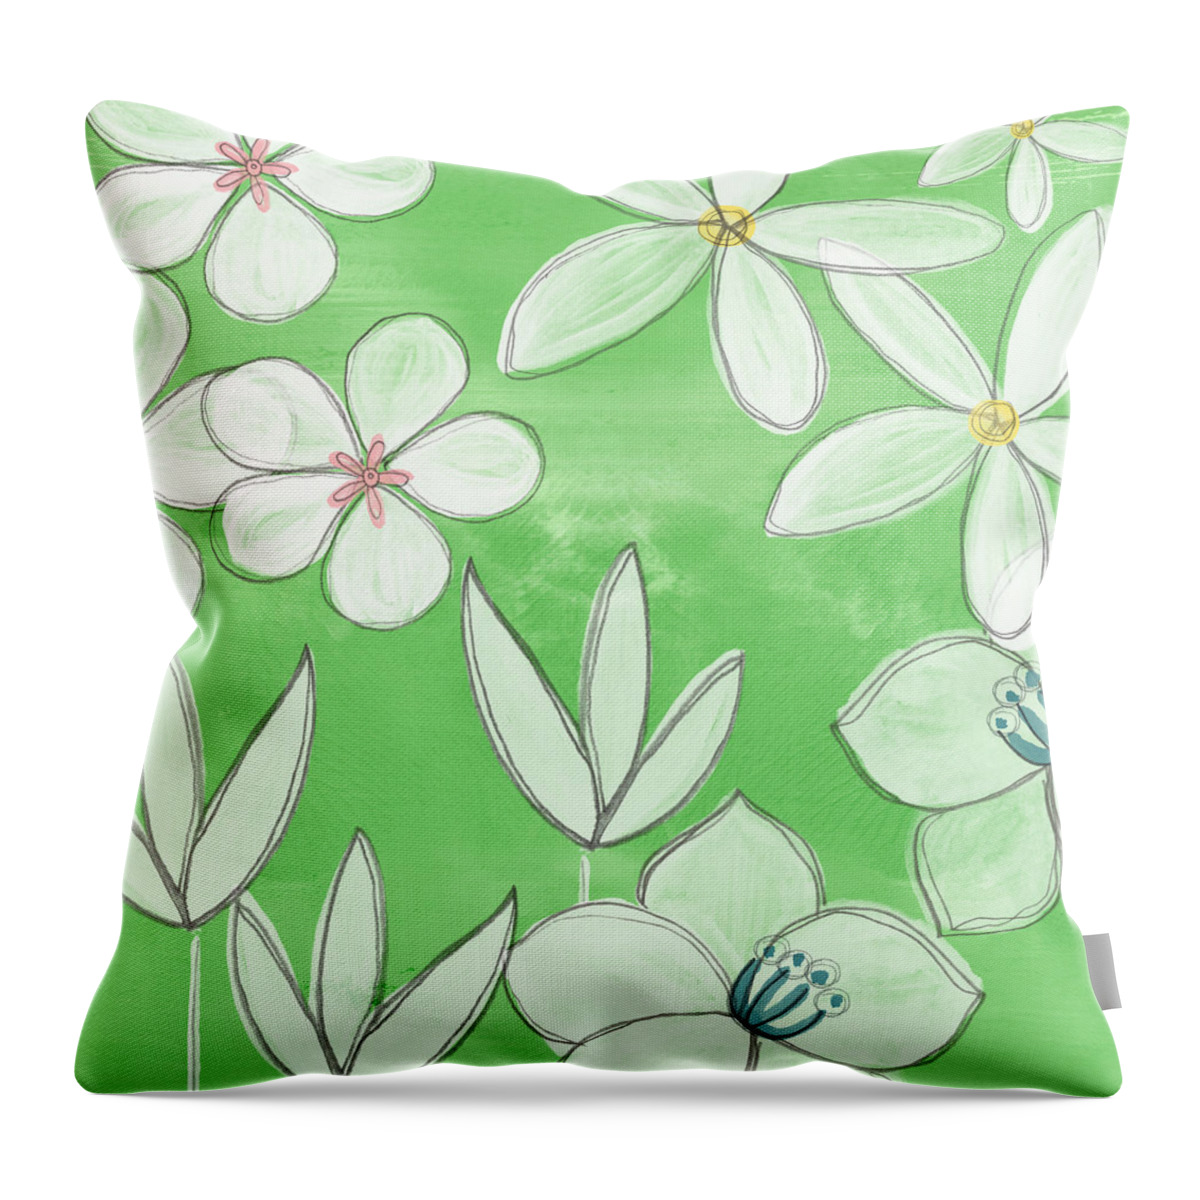 Garden Throw Pillow featuring the painting Green Garden by Linda Woods